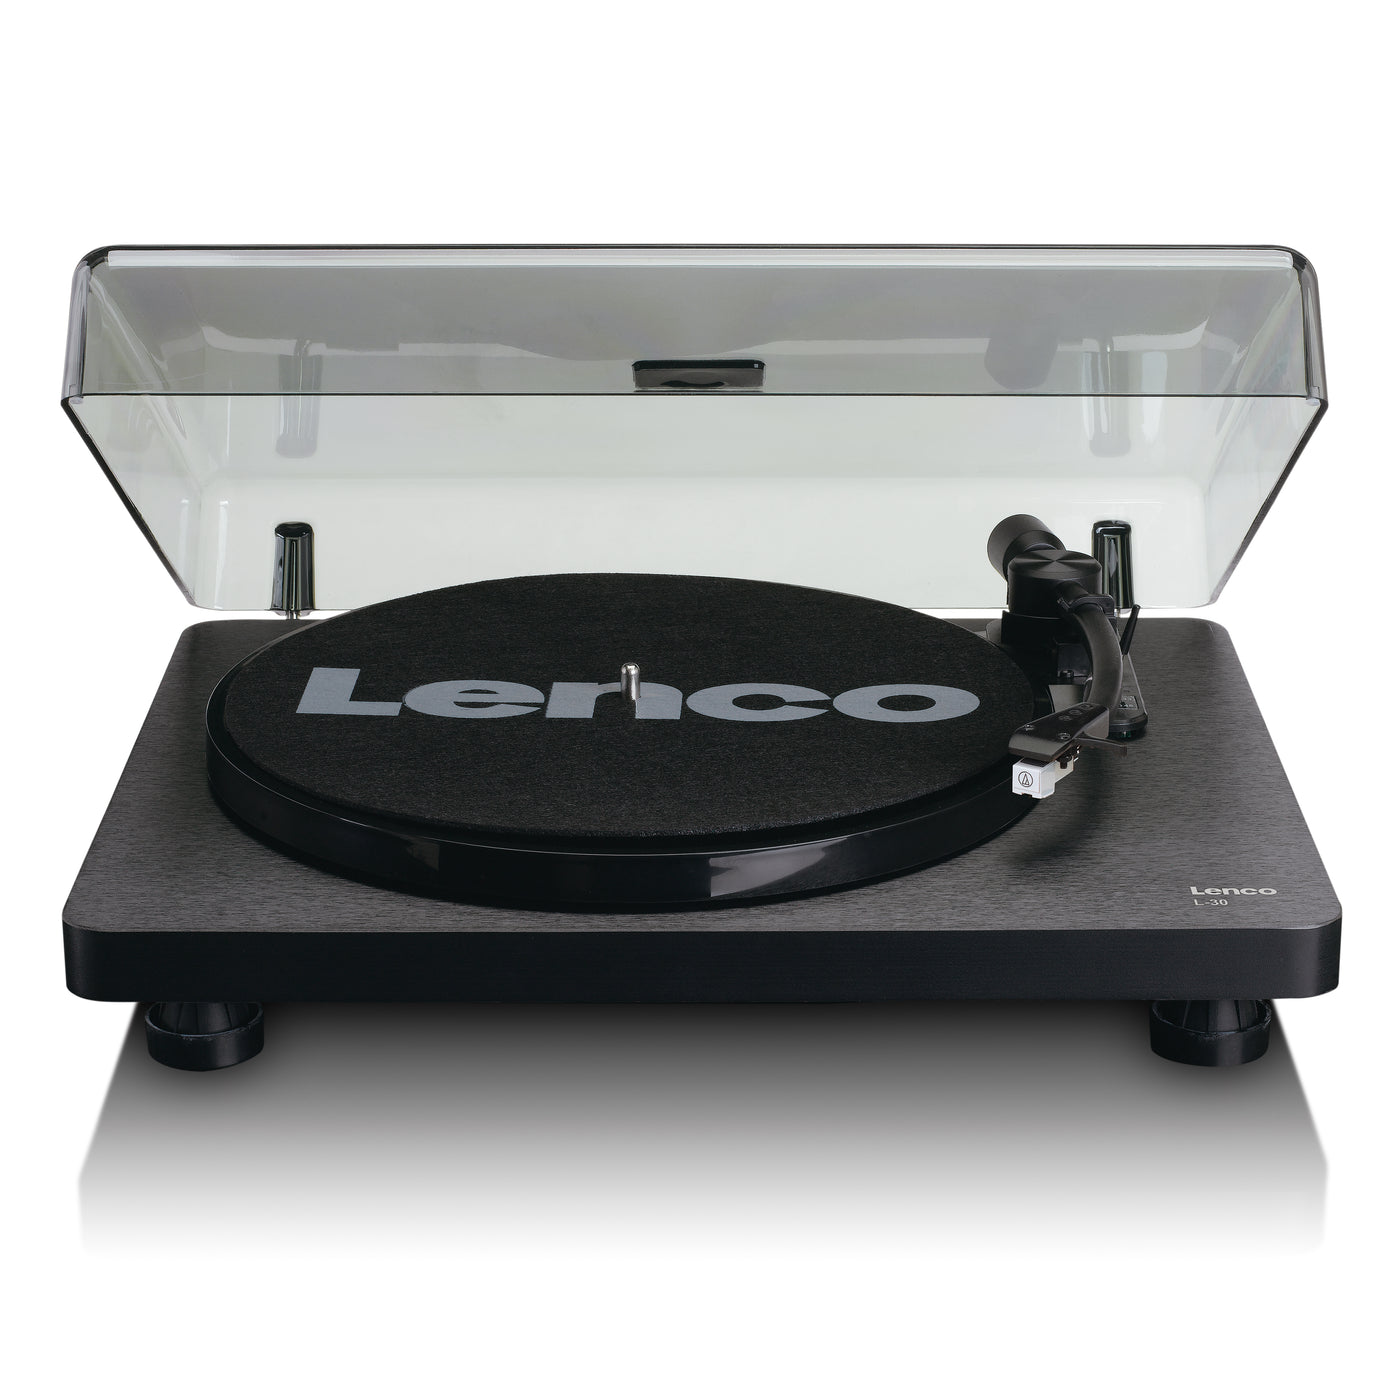 LENCO L-30BK Turntable with USB/PC encoding - Black